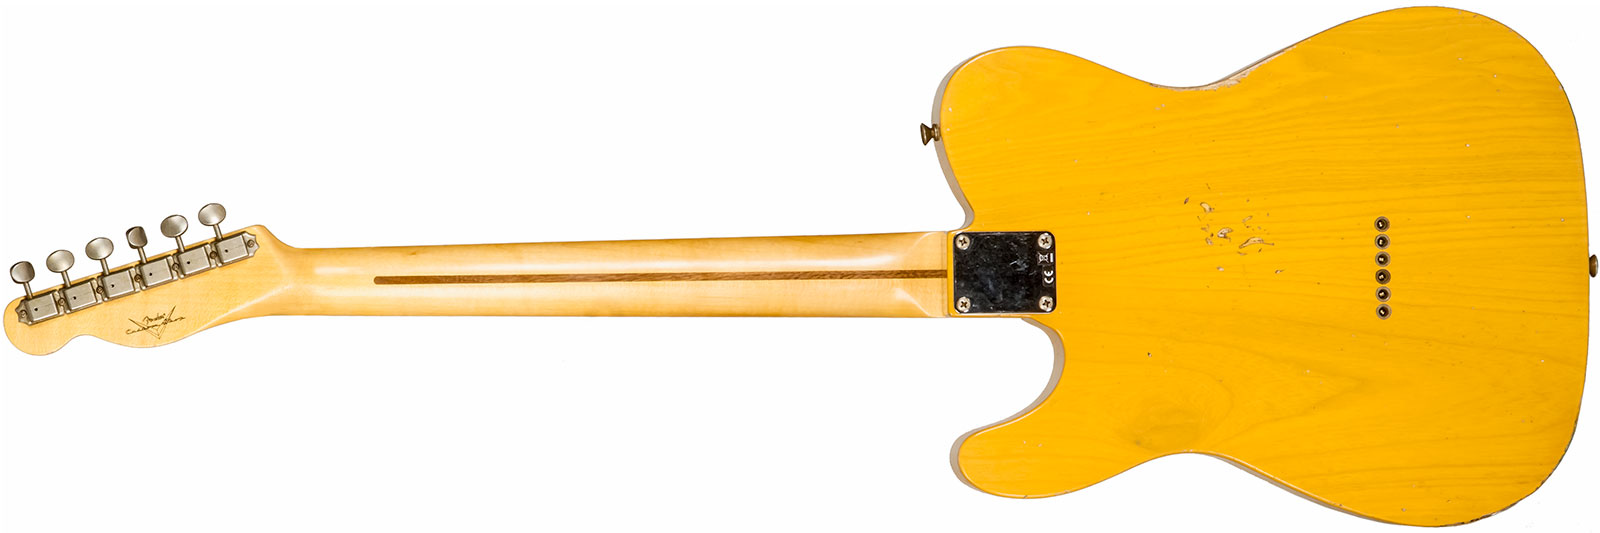 Fender Custom Shop Tele 1952 2s Ht Mn #r135225 - Relic Aged Buttercotch Blonde - Tel shape electric guitar - Variation 1